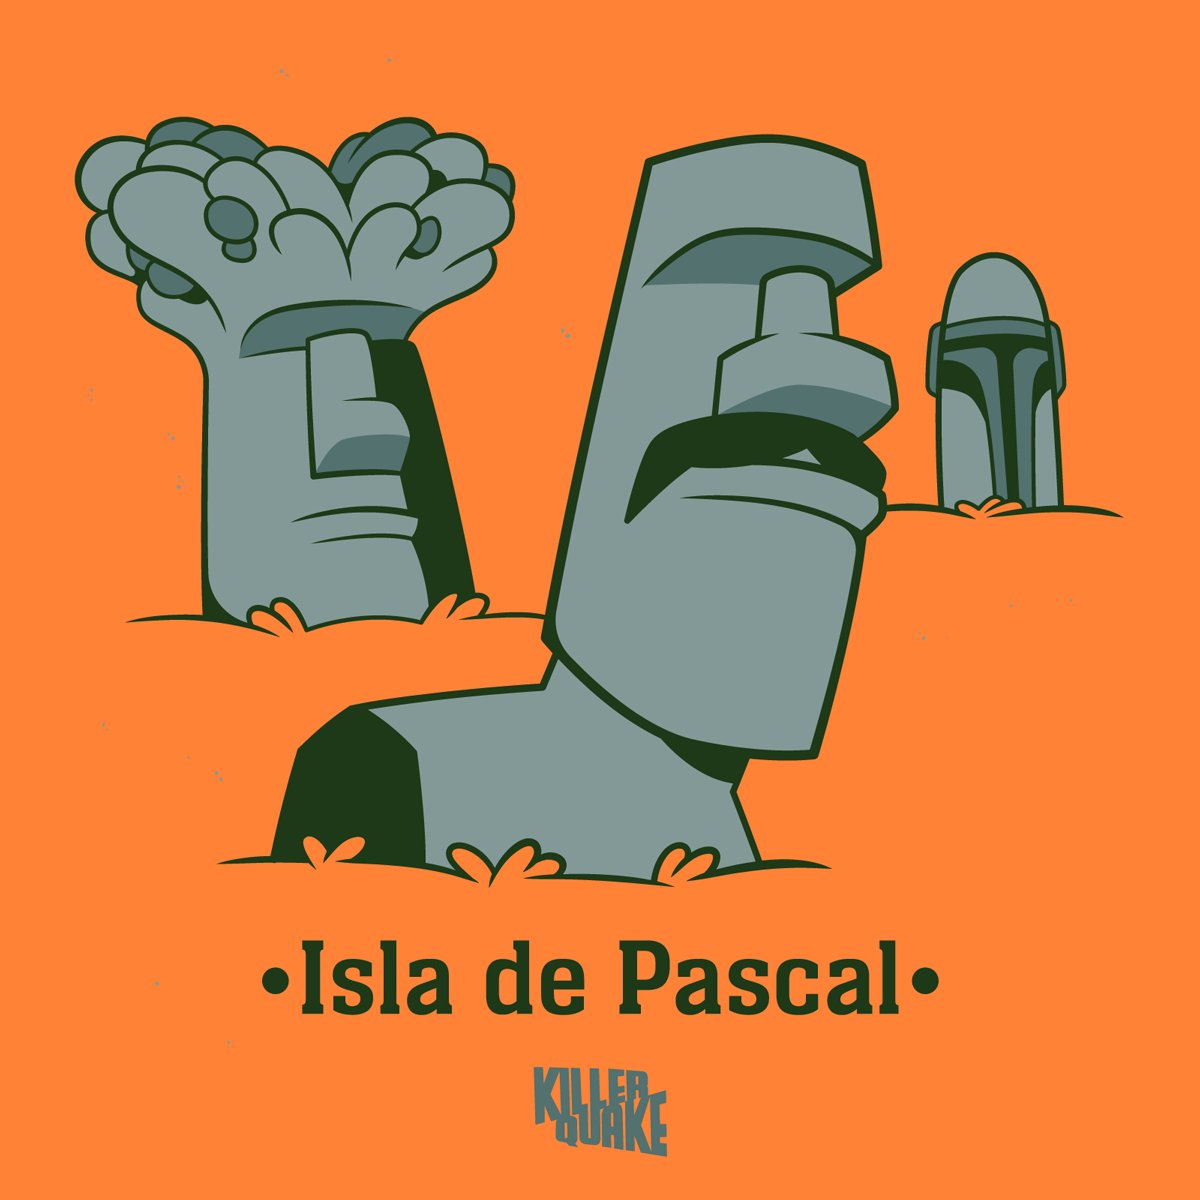 Aquí somos #TeamPedro ❤️ 🇨🇱
@pascalispunk

#PedroPascal #chile #TheMandalorian
#TheLastOfUS #serie